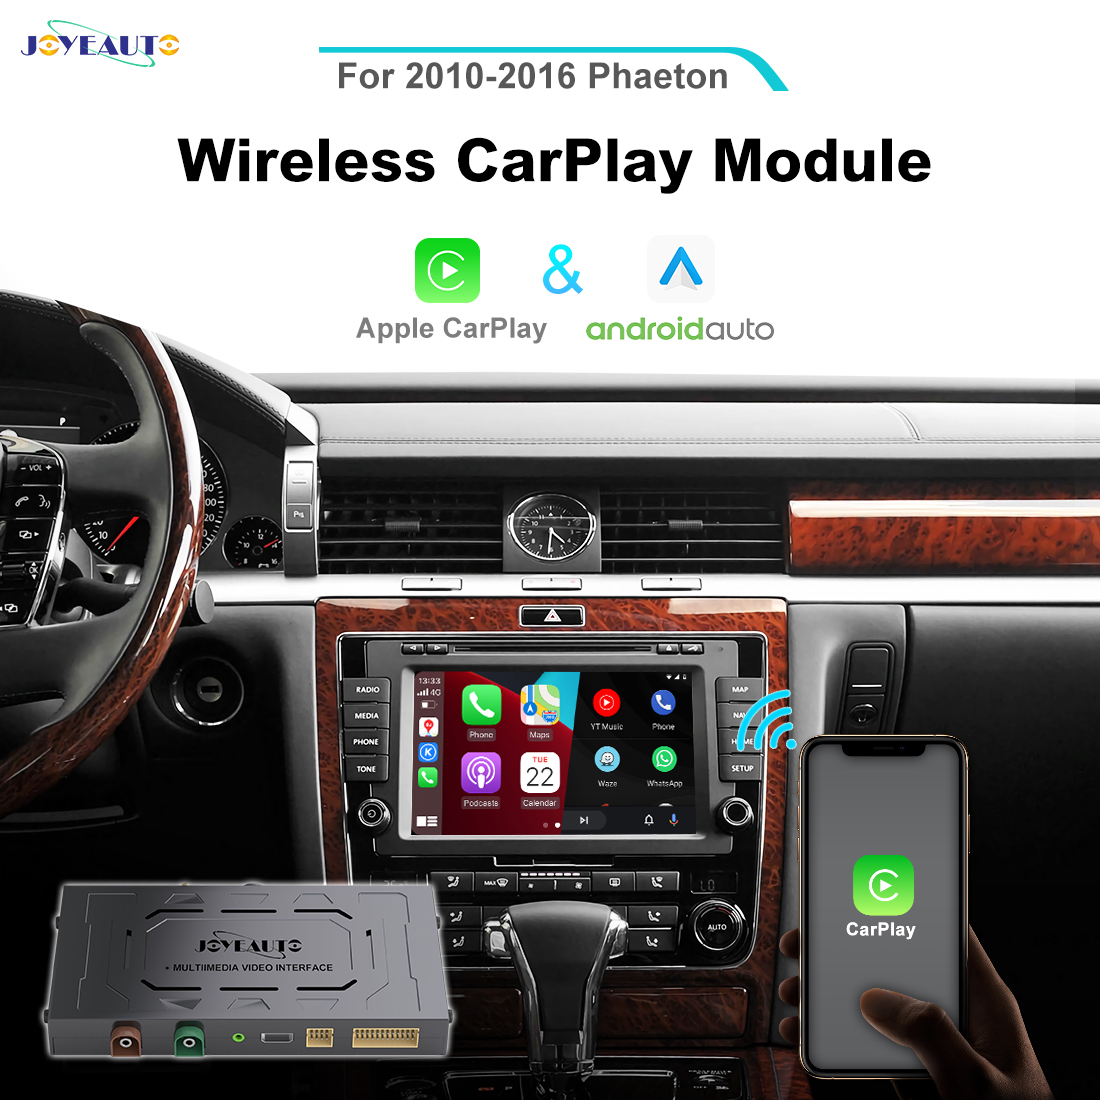 Volkswagen Phaeton WiFi Wireless Apple CarPlay AirPlay Android Auto  Interface - Joyeauto Technology